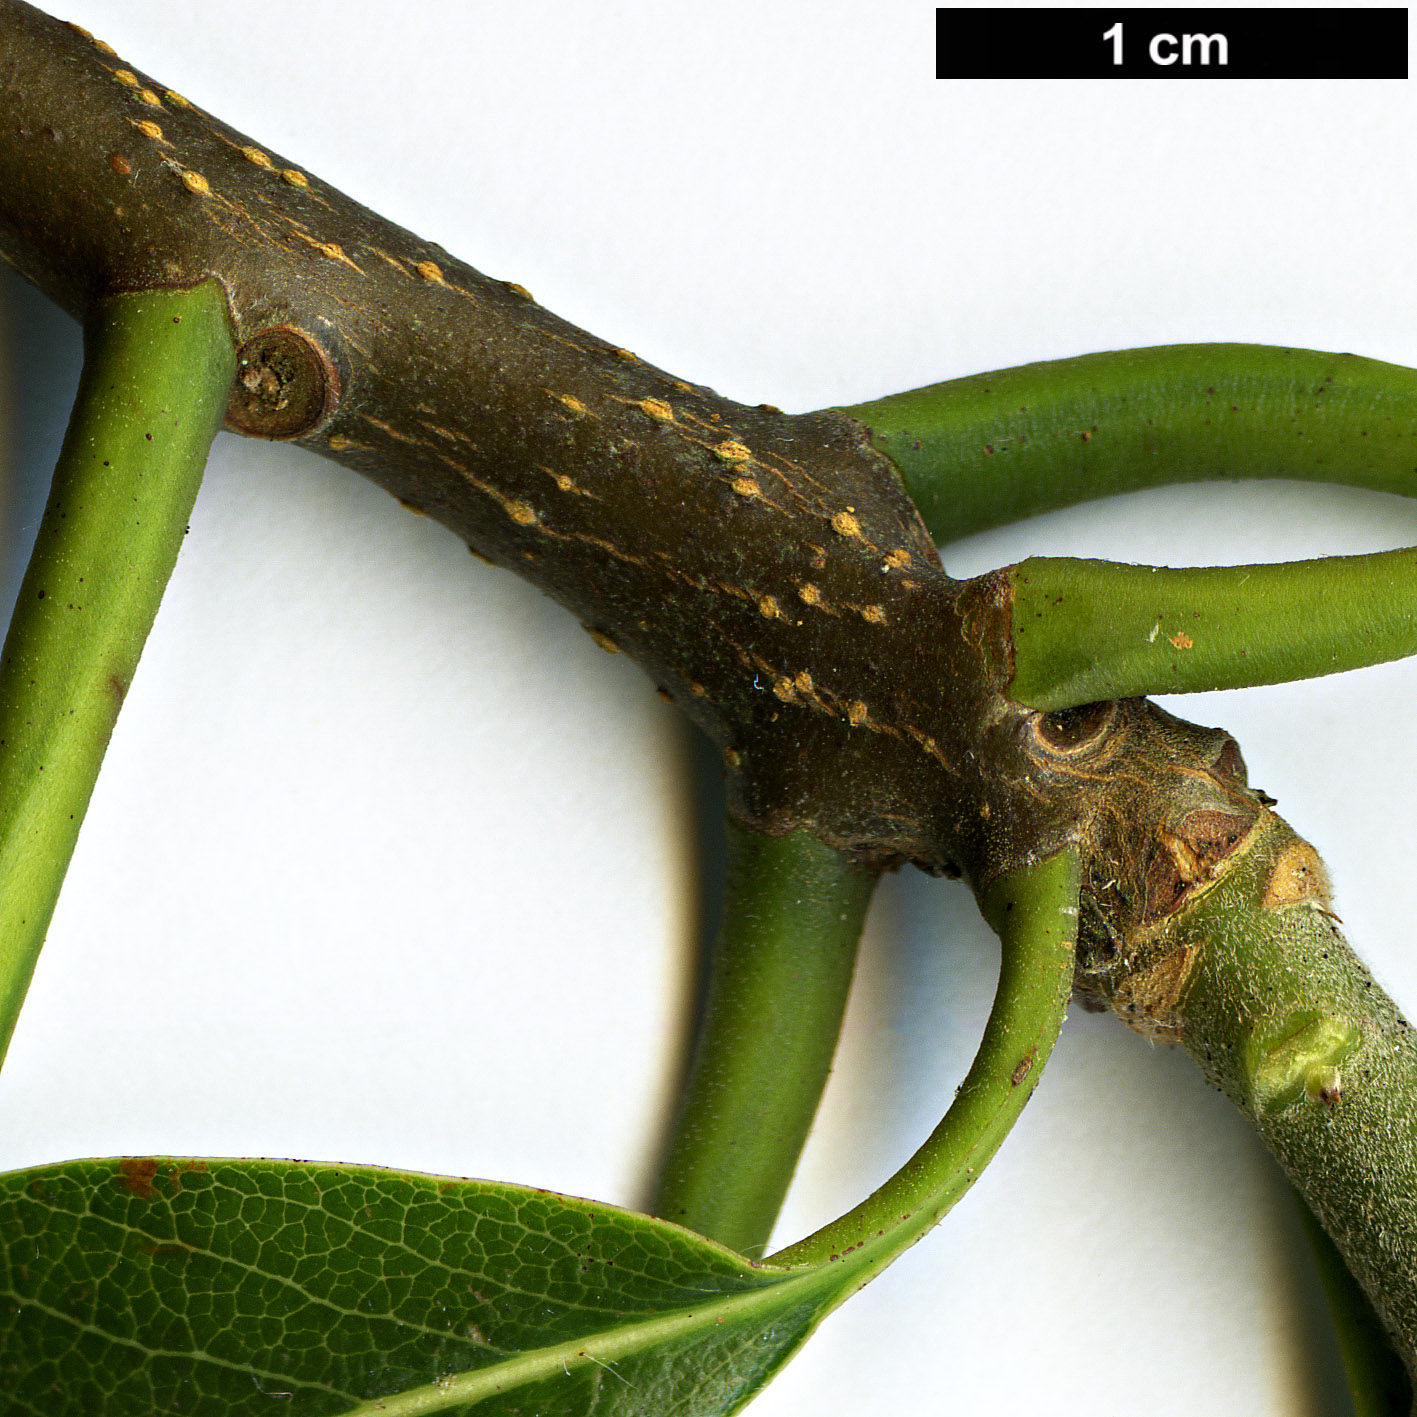 High resolution image: Family: Theaceae - Genus: Schima - Taxon: argentea